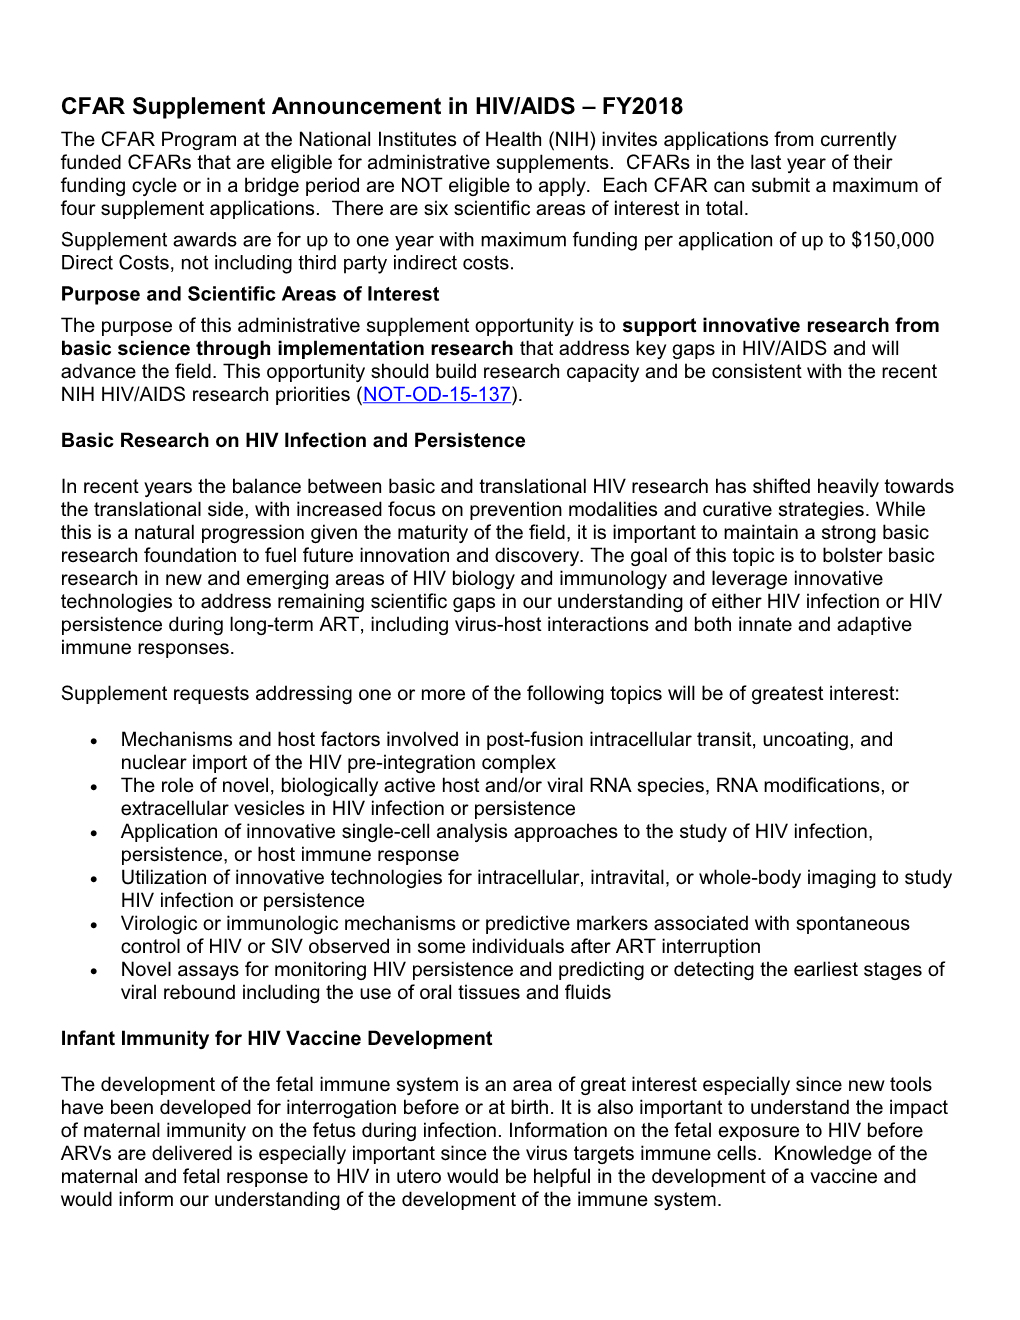 CFAR Supplement Announcement in HIV/AIDS FY2018